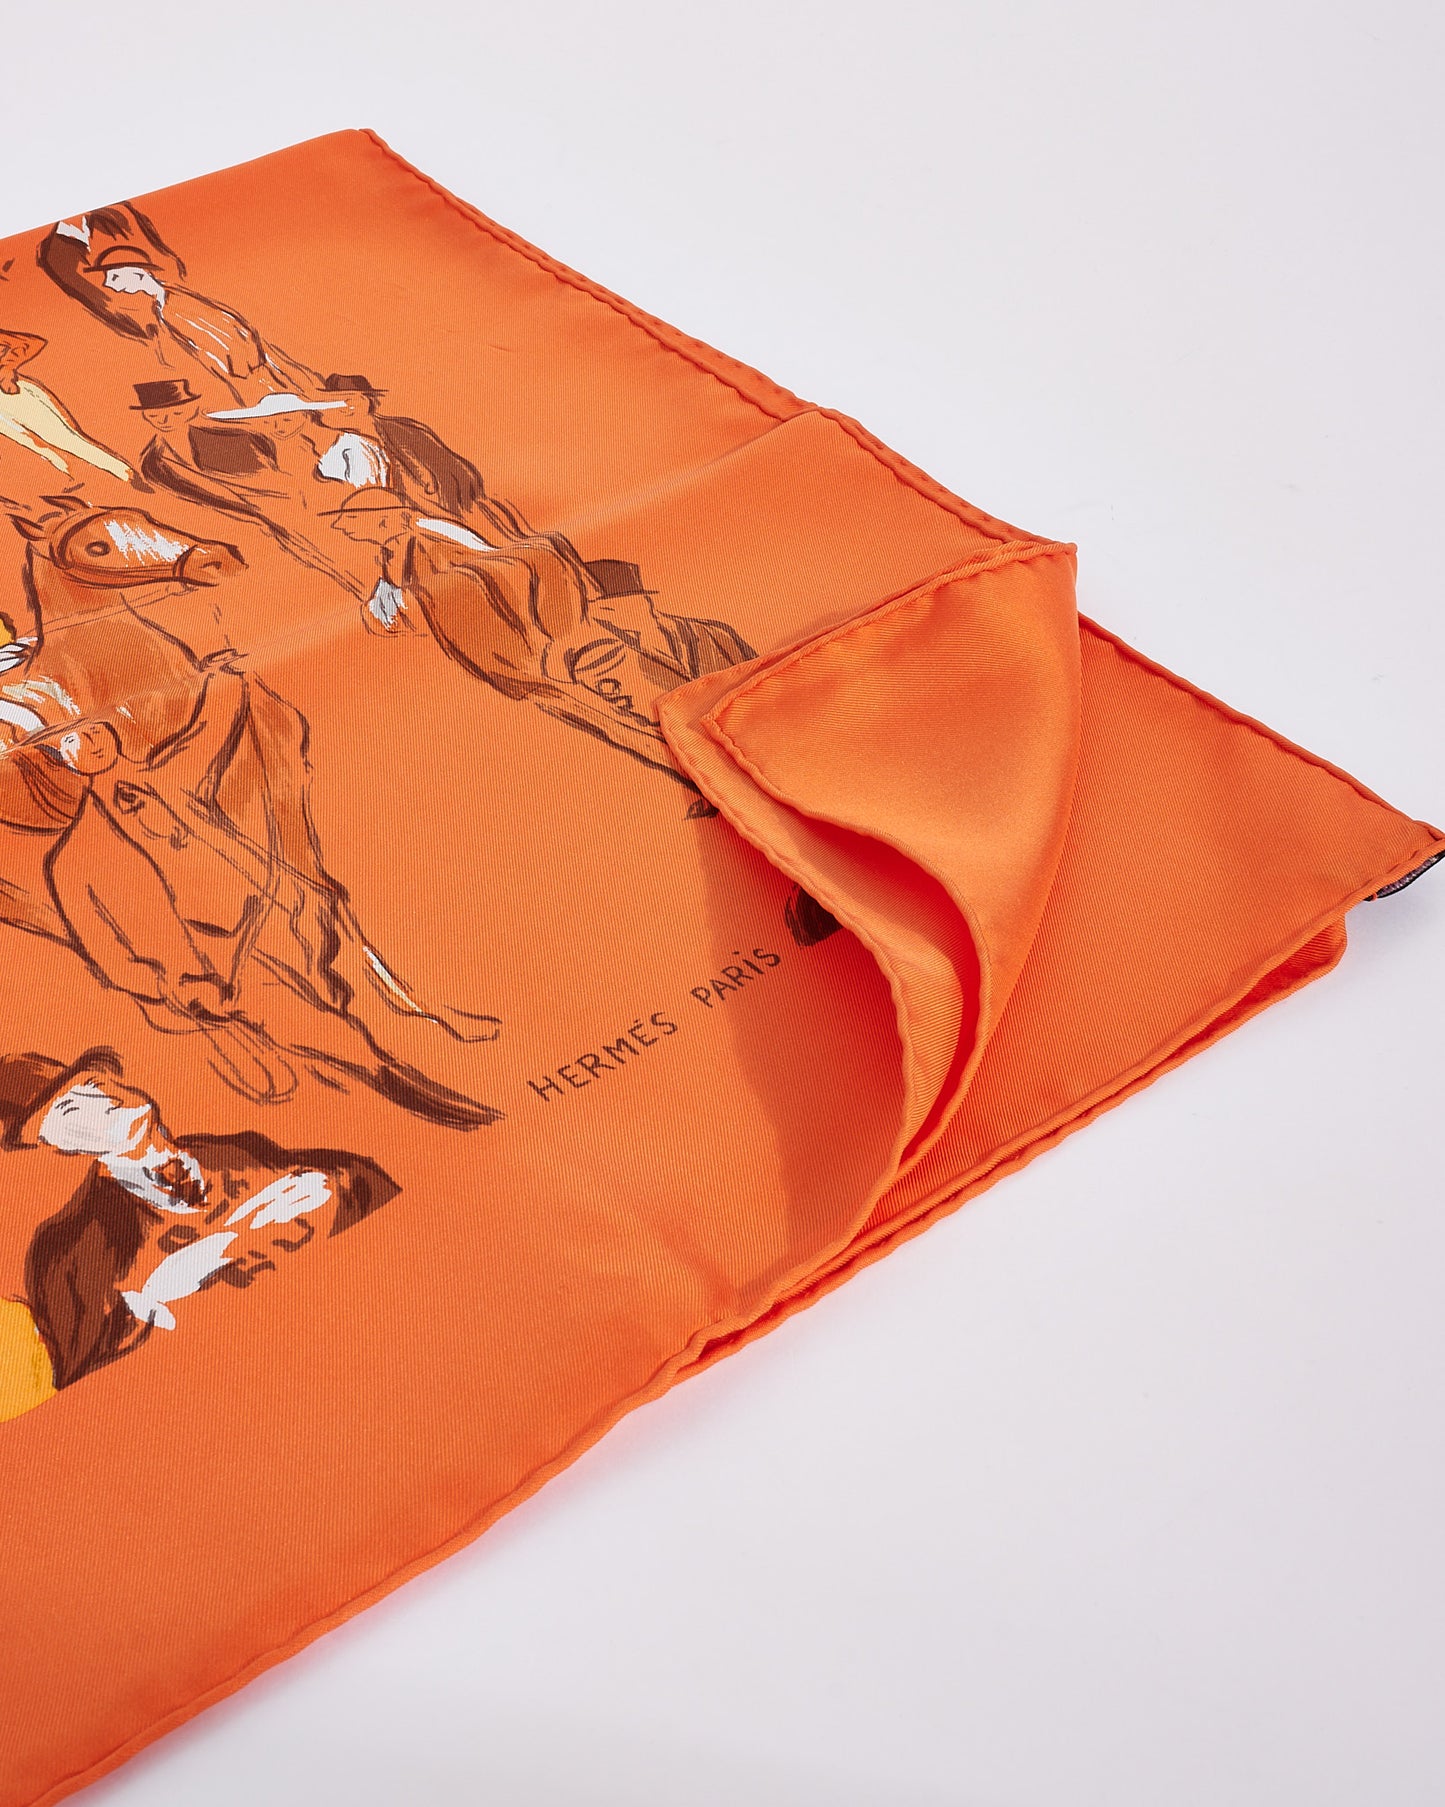 Hermès Orange Silk "Clerc" Scarf 90